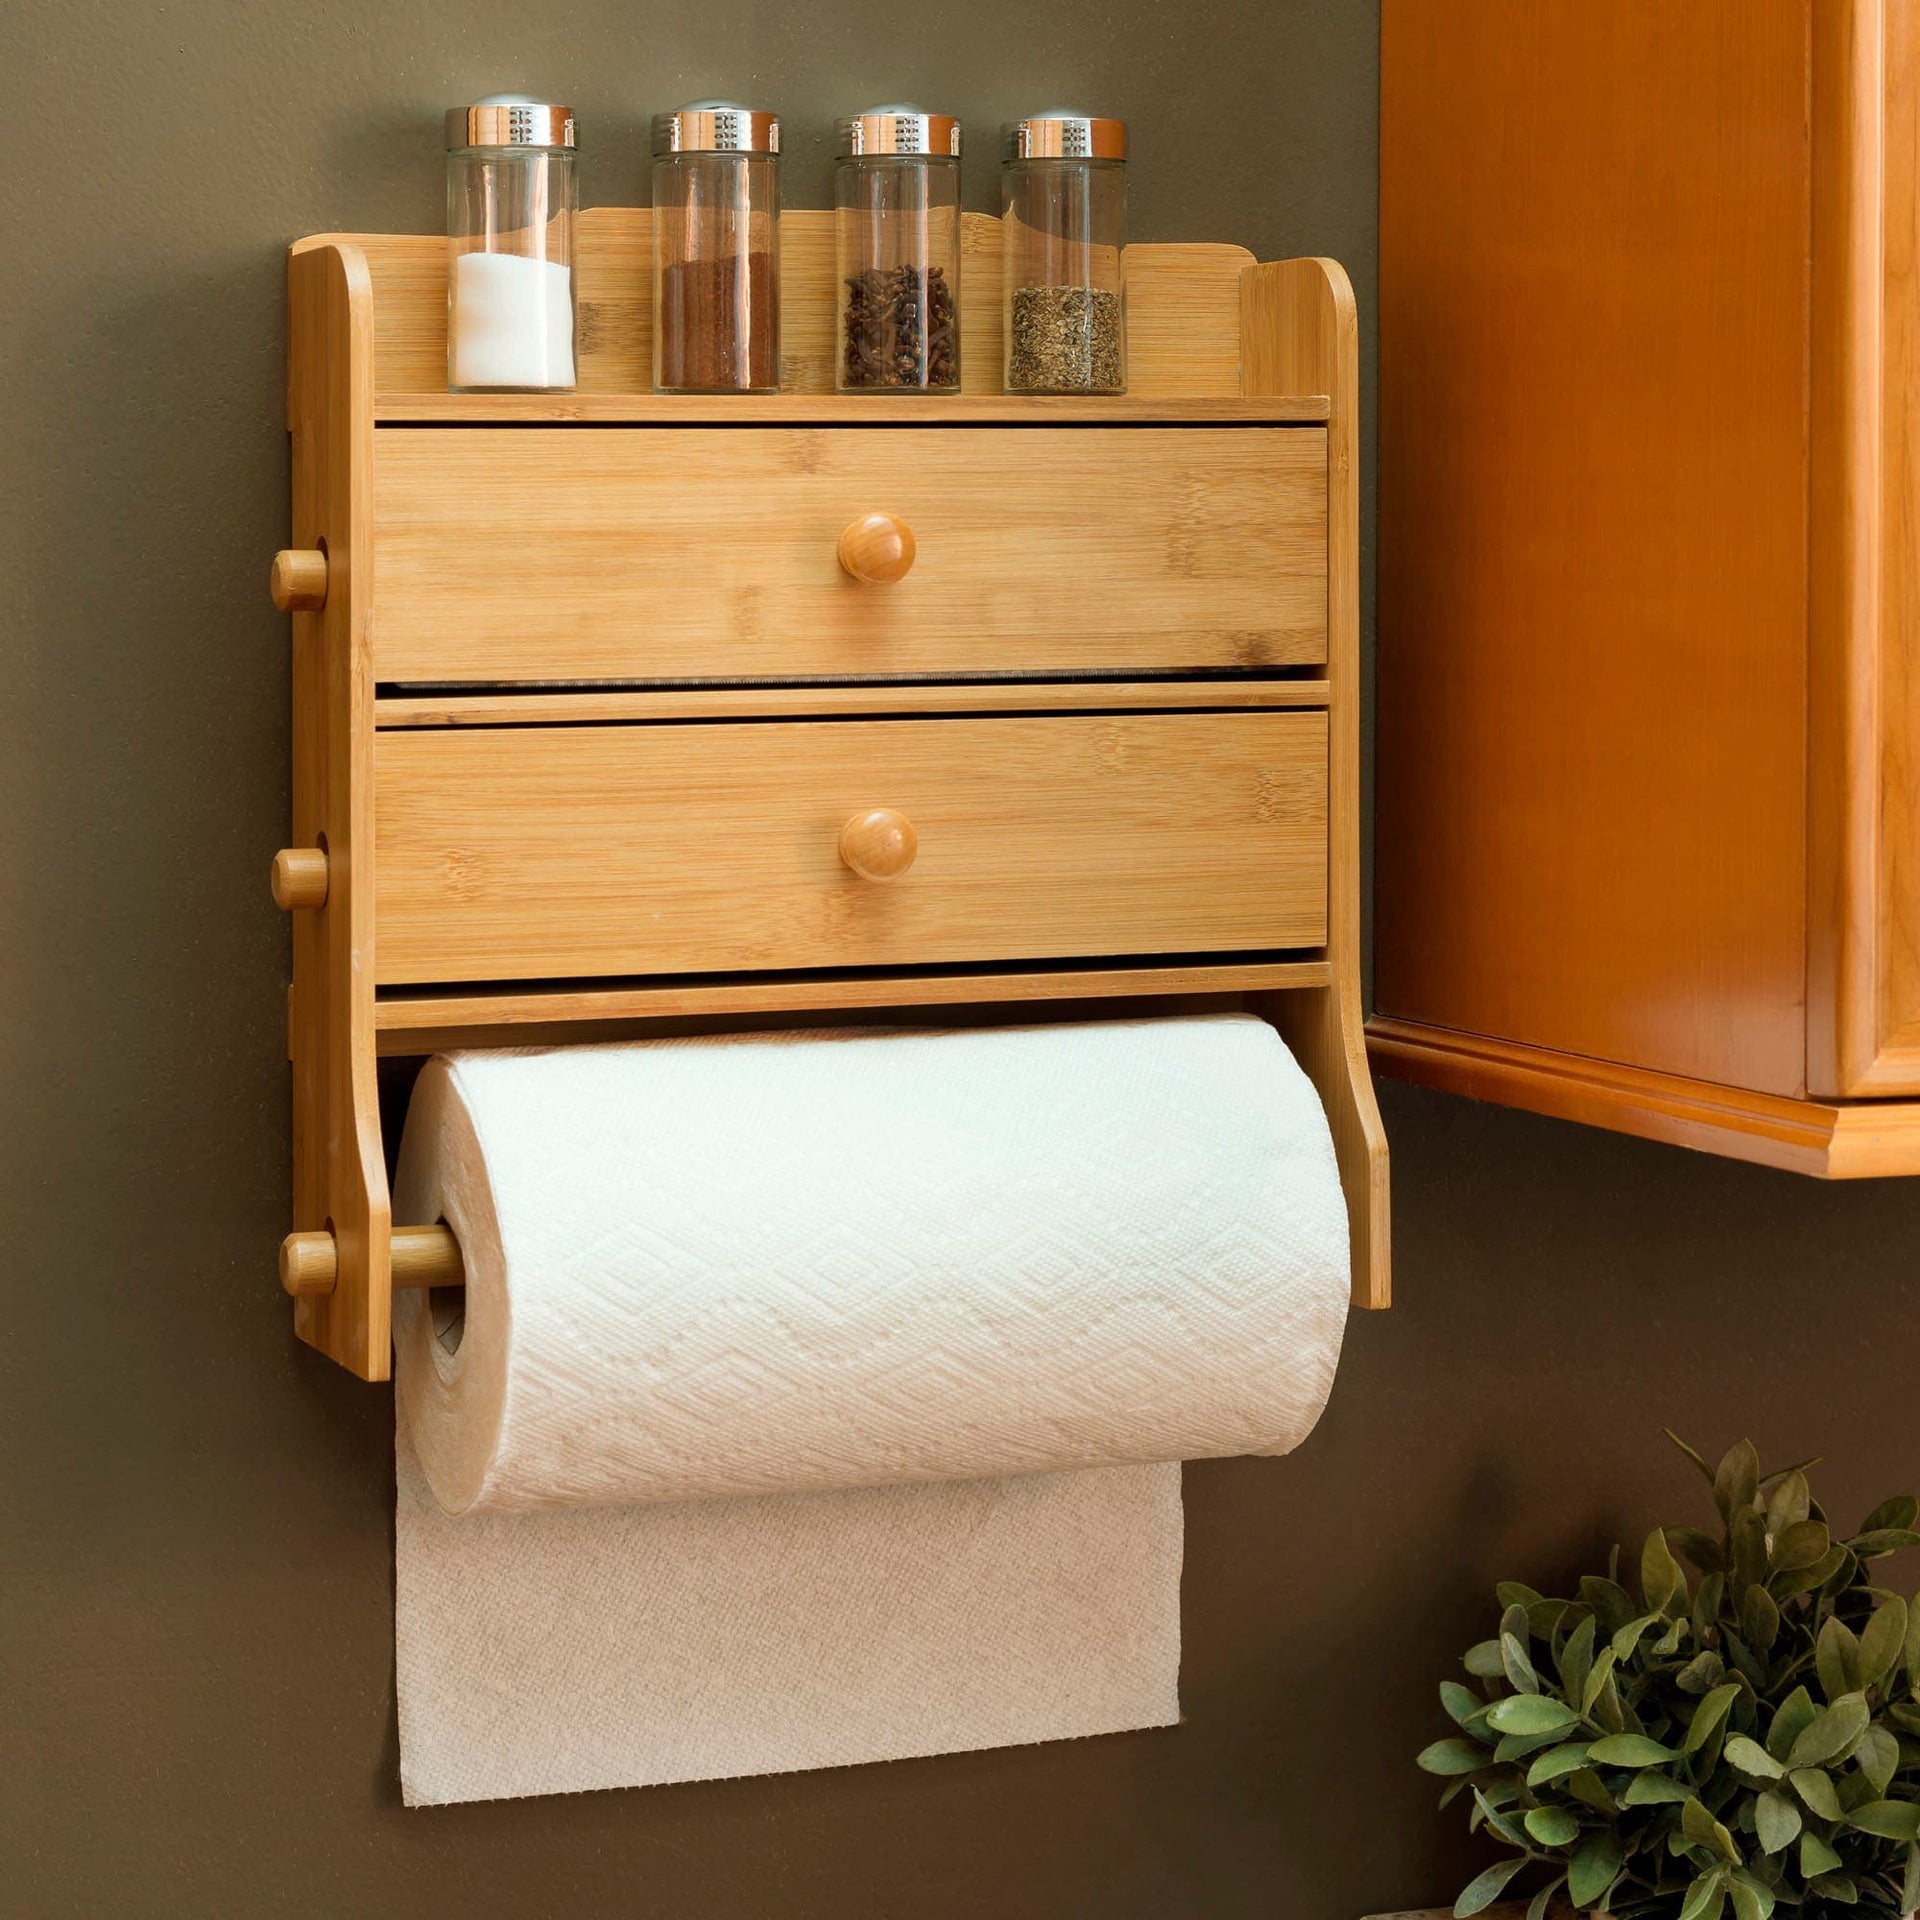 Home Basics Pave Free Standing Paper Towel Holder, Chrome, KITCHEN  ORGANIZATION